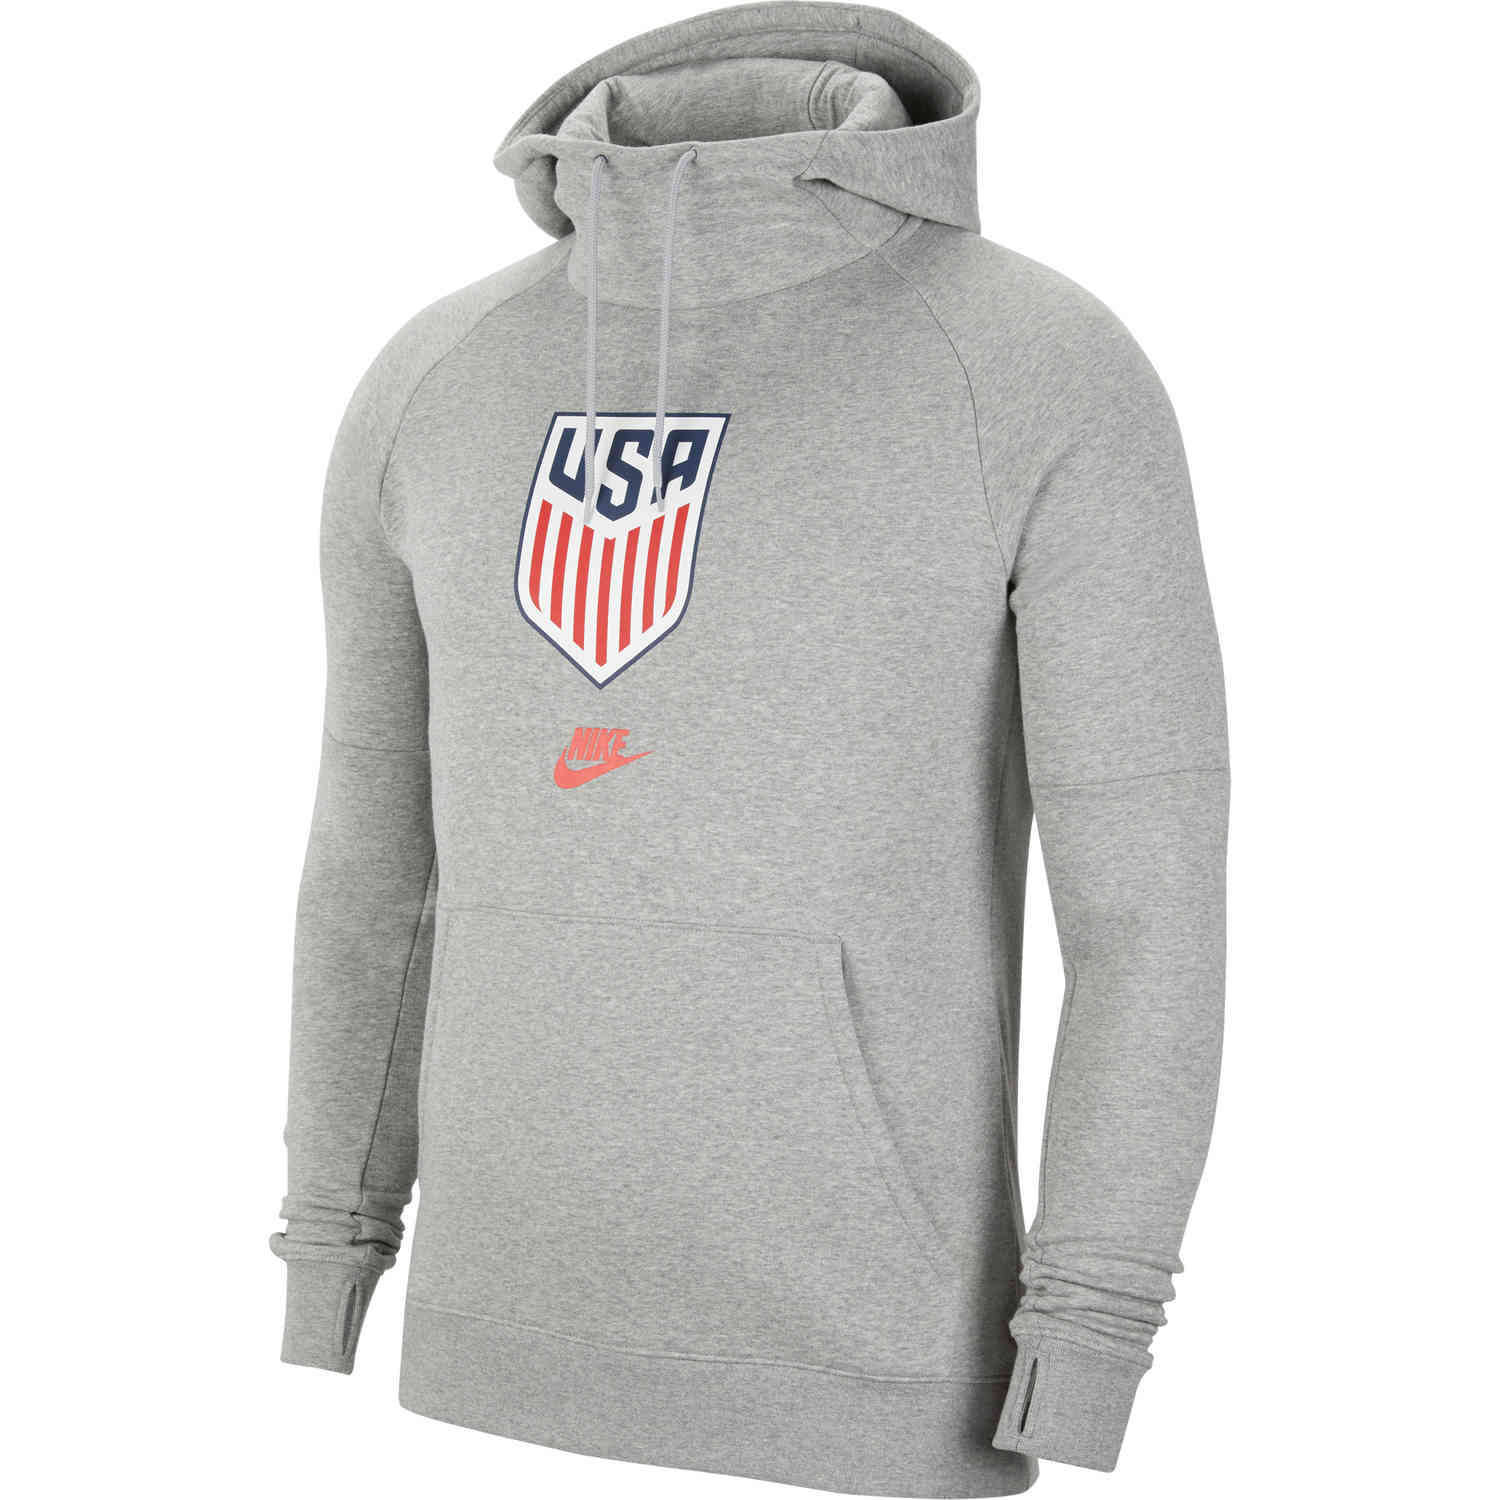 Nike USA Fleece Hoodie Grey Heather/Speed Red - SoccerPro